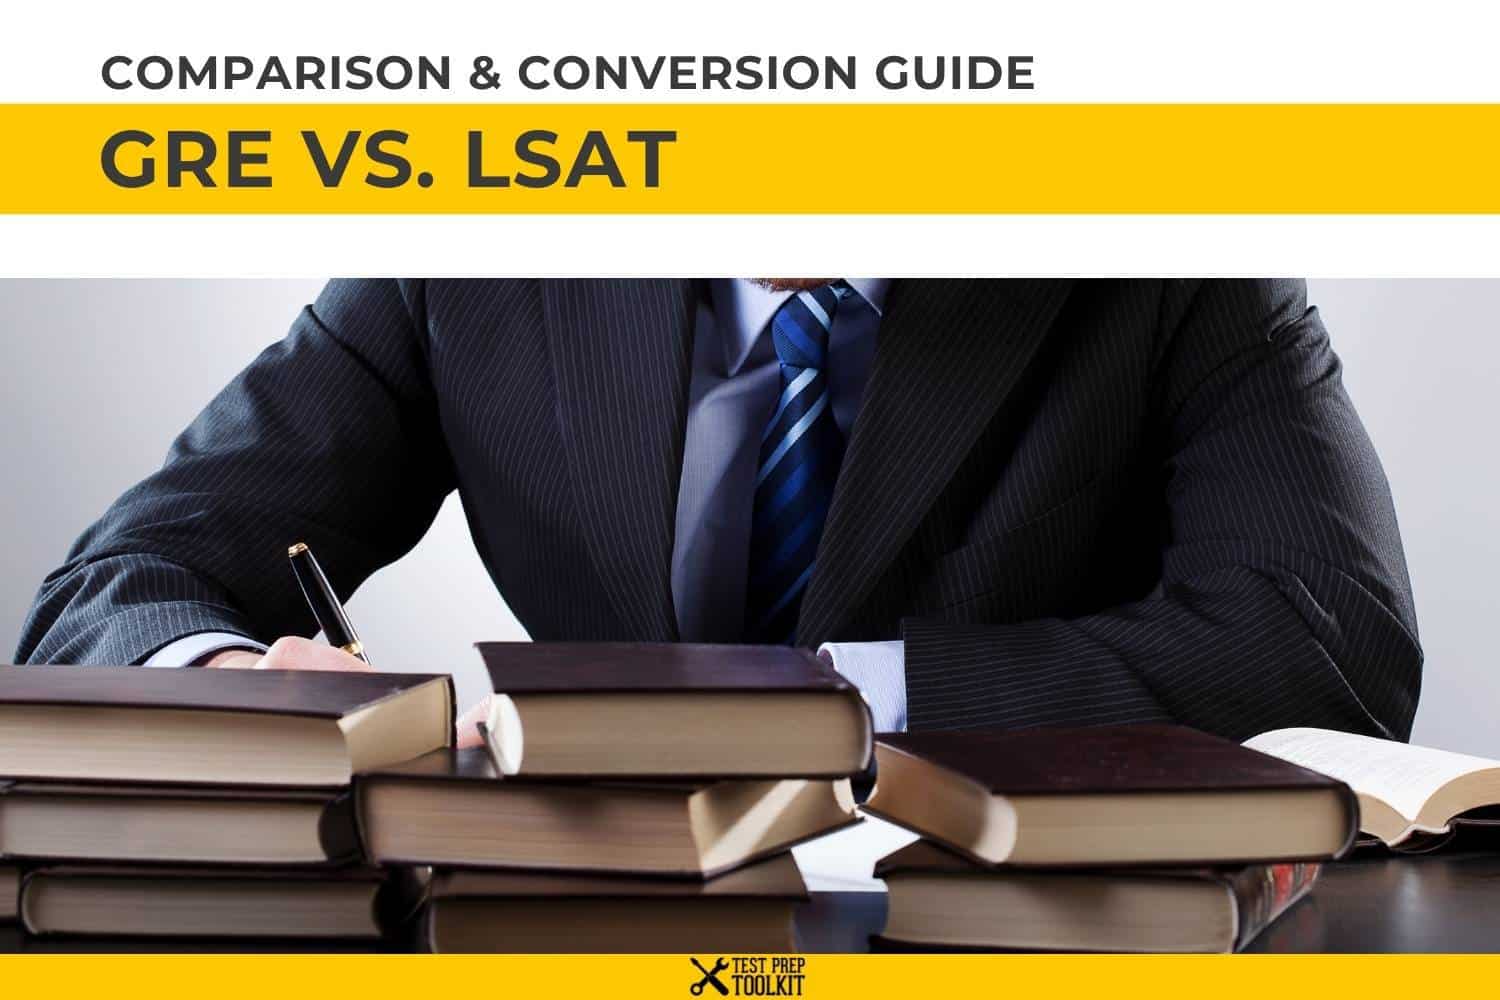 gre-vs-lsat-comparison-conversion-guide-testpreptoolkit